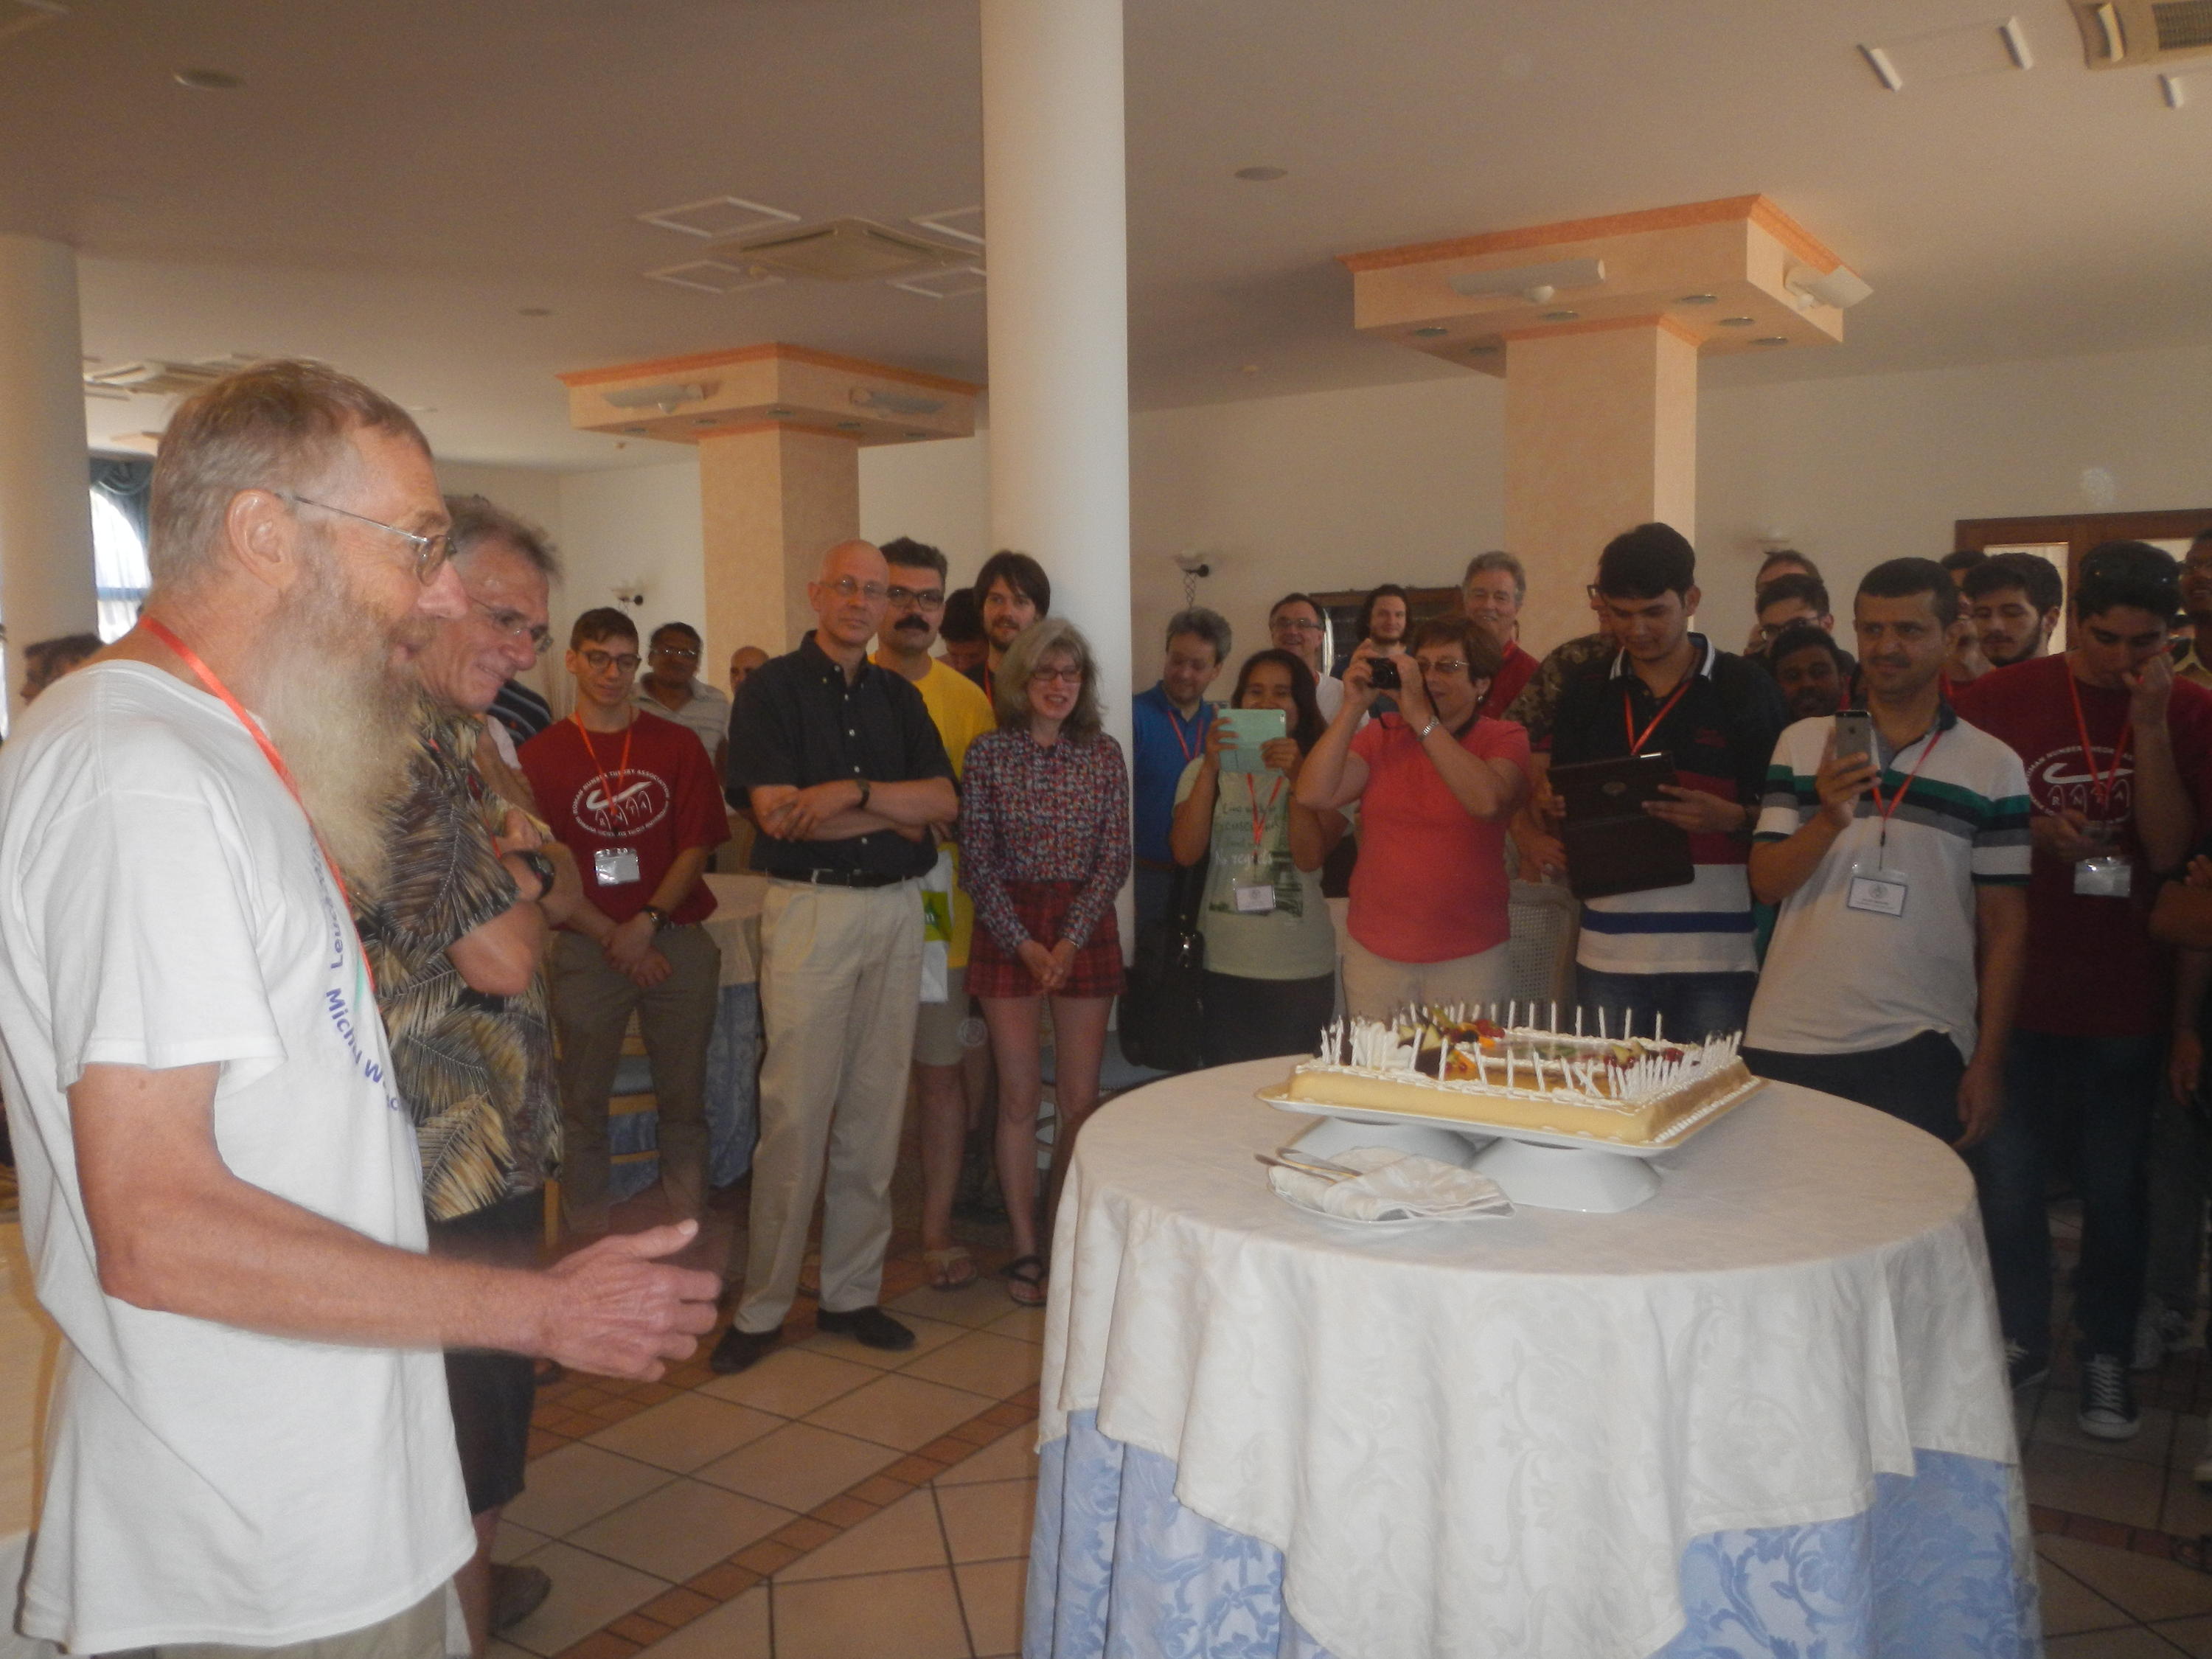 Leuca2016: Celebrating Michel Waldschmidt's 70th Birthday